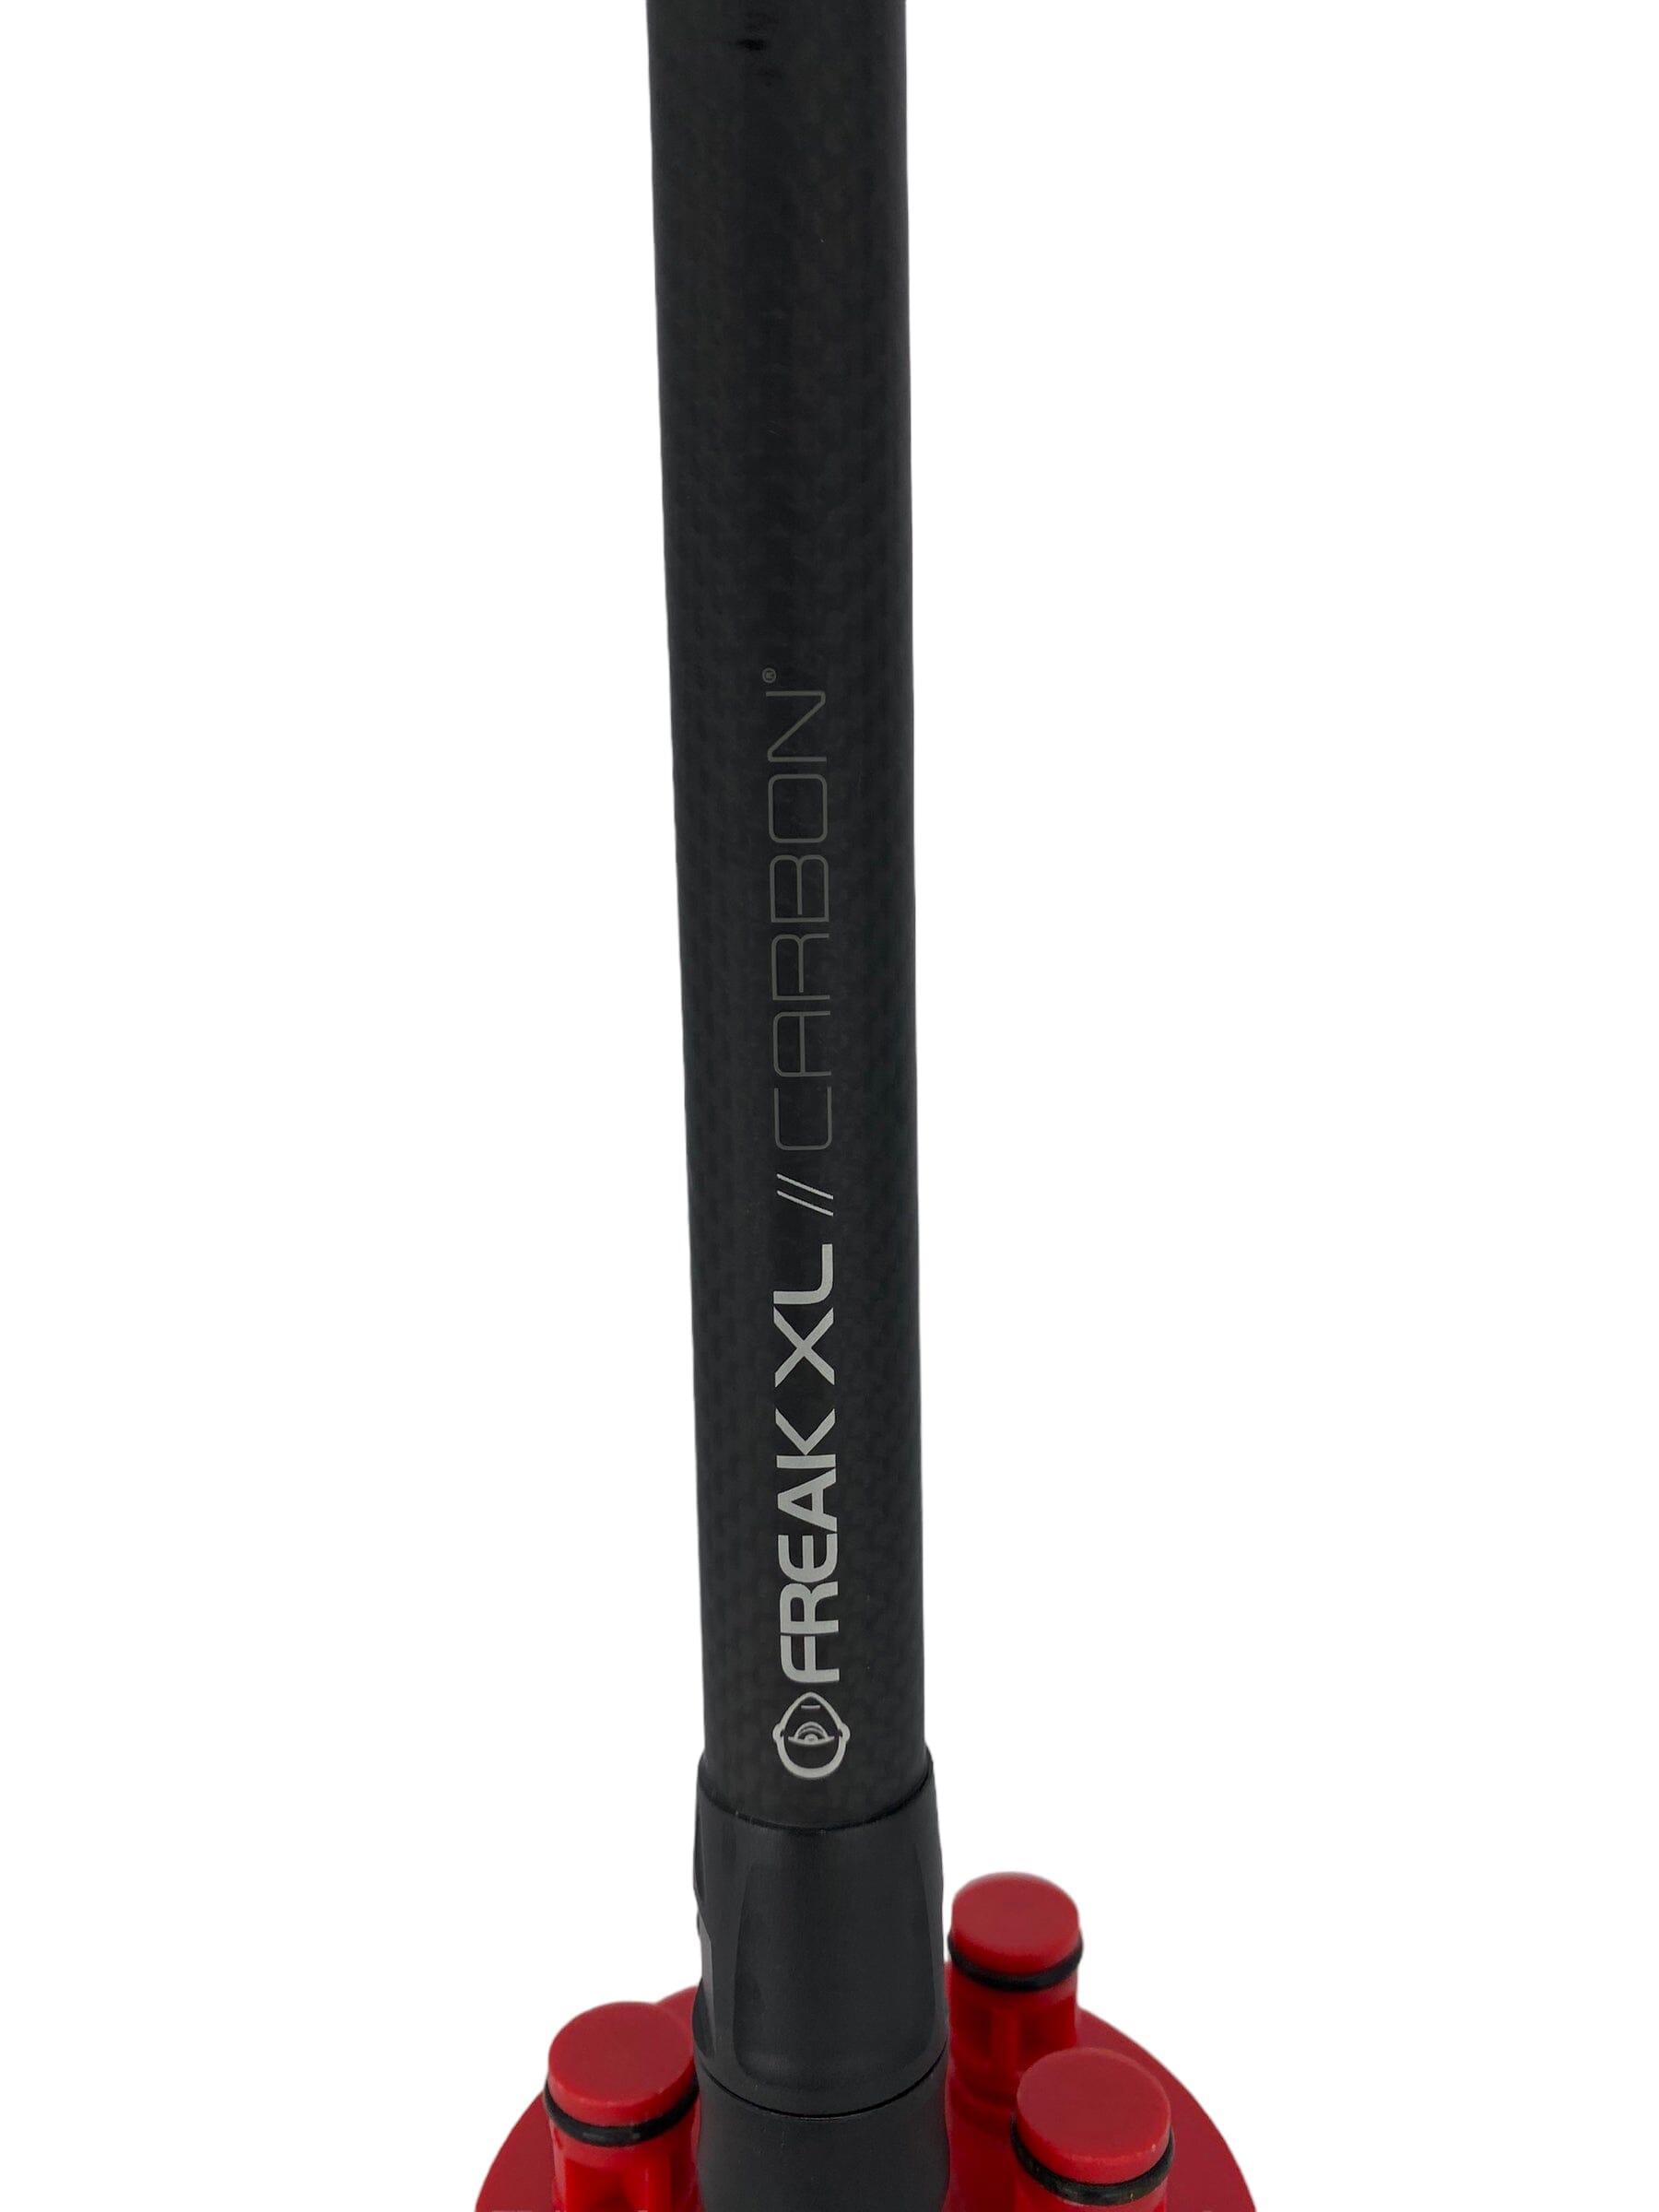 Used Freak XL Carbon Fiber Paintball Gun Barrel Paintball Gun from CPXBrosPaintball Buy/Sell/Trade Paintball Markers, Paintball Hoppers, Paintball Masks, and Hormesis Headbands